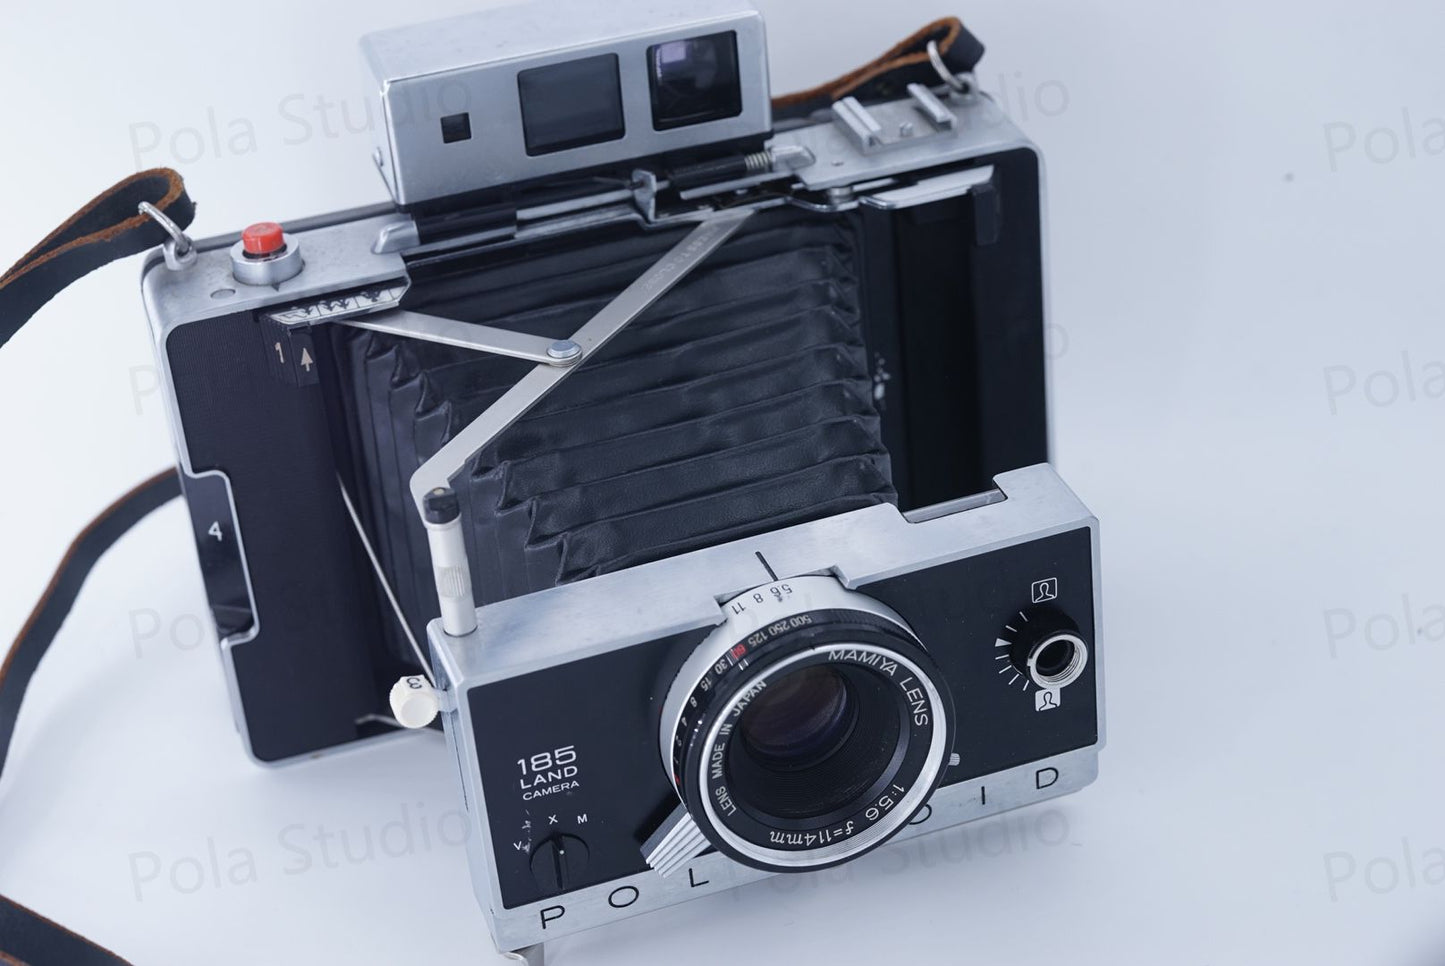 Polaroid 185 Land Camera original Super rare Model!!!